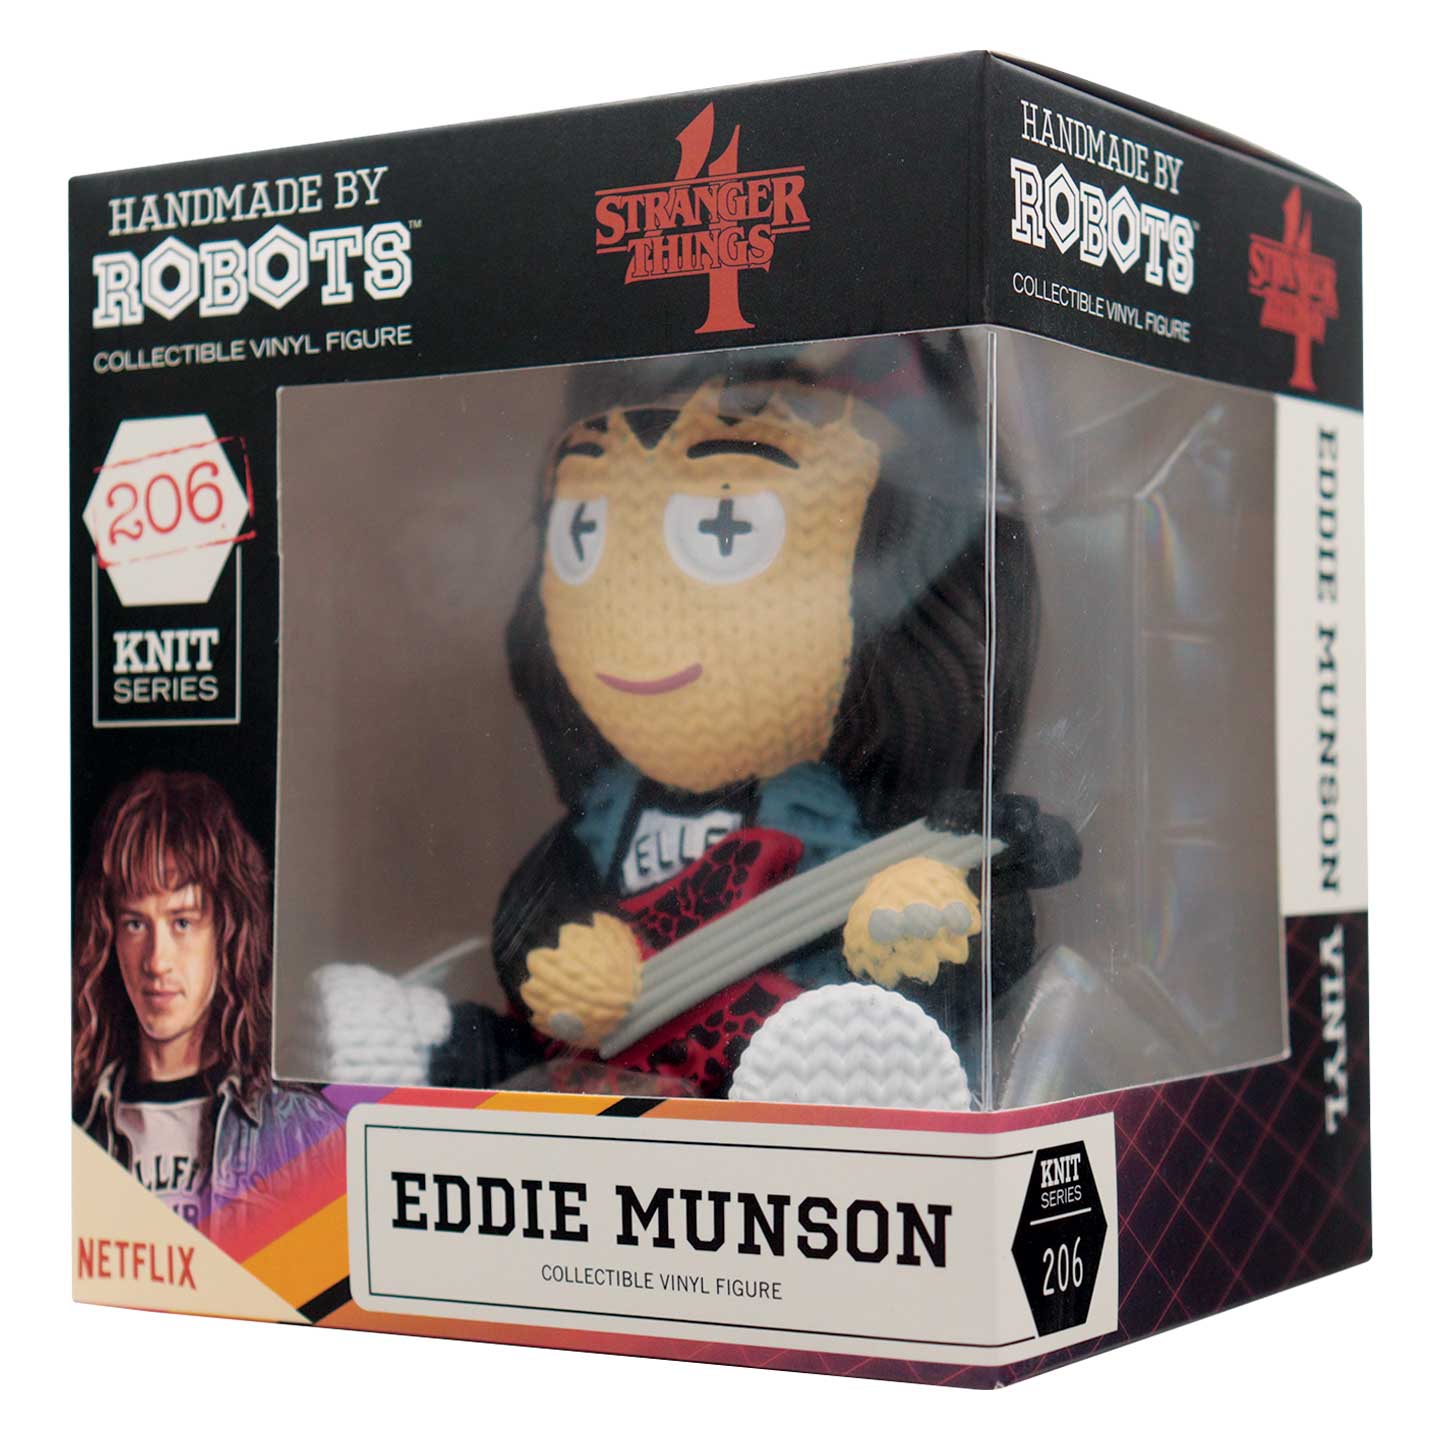 Stranger Things Eddie Munson Vinyl Figure from Handmade by Robots